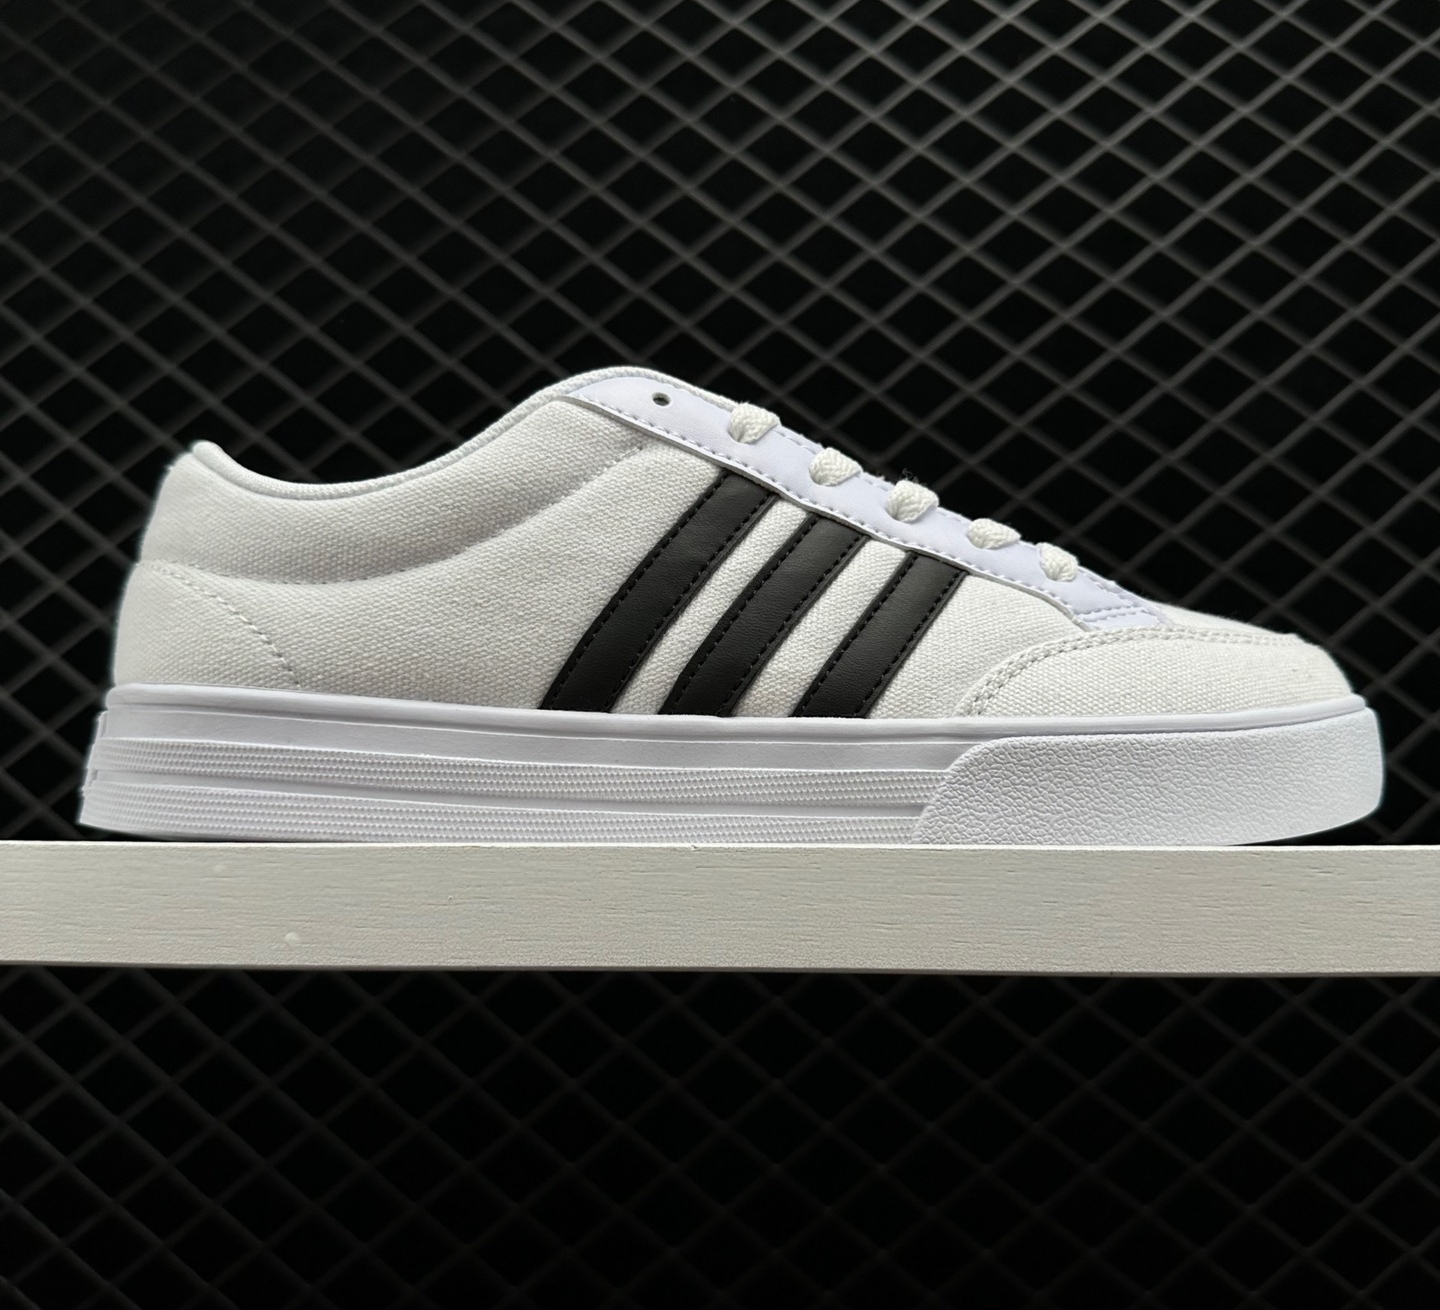 Adidas VS Set 'White Black' AW3889 - Trendy Athletic Shoes for Men